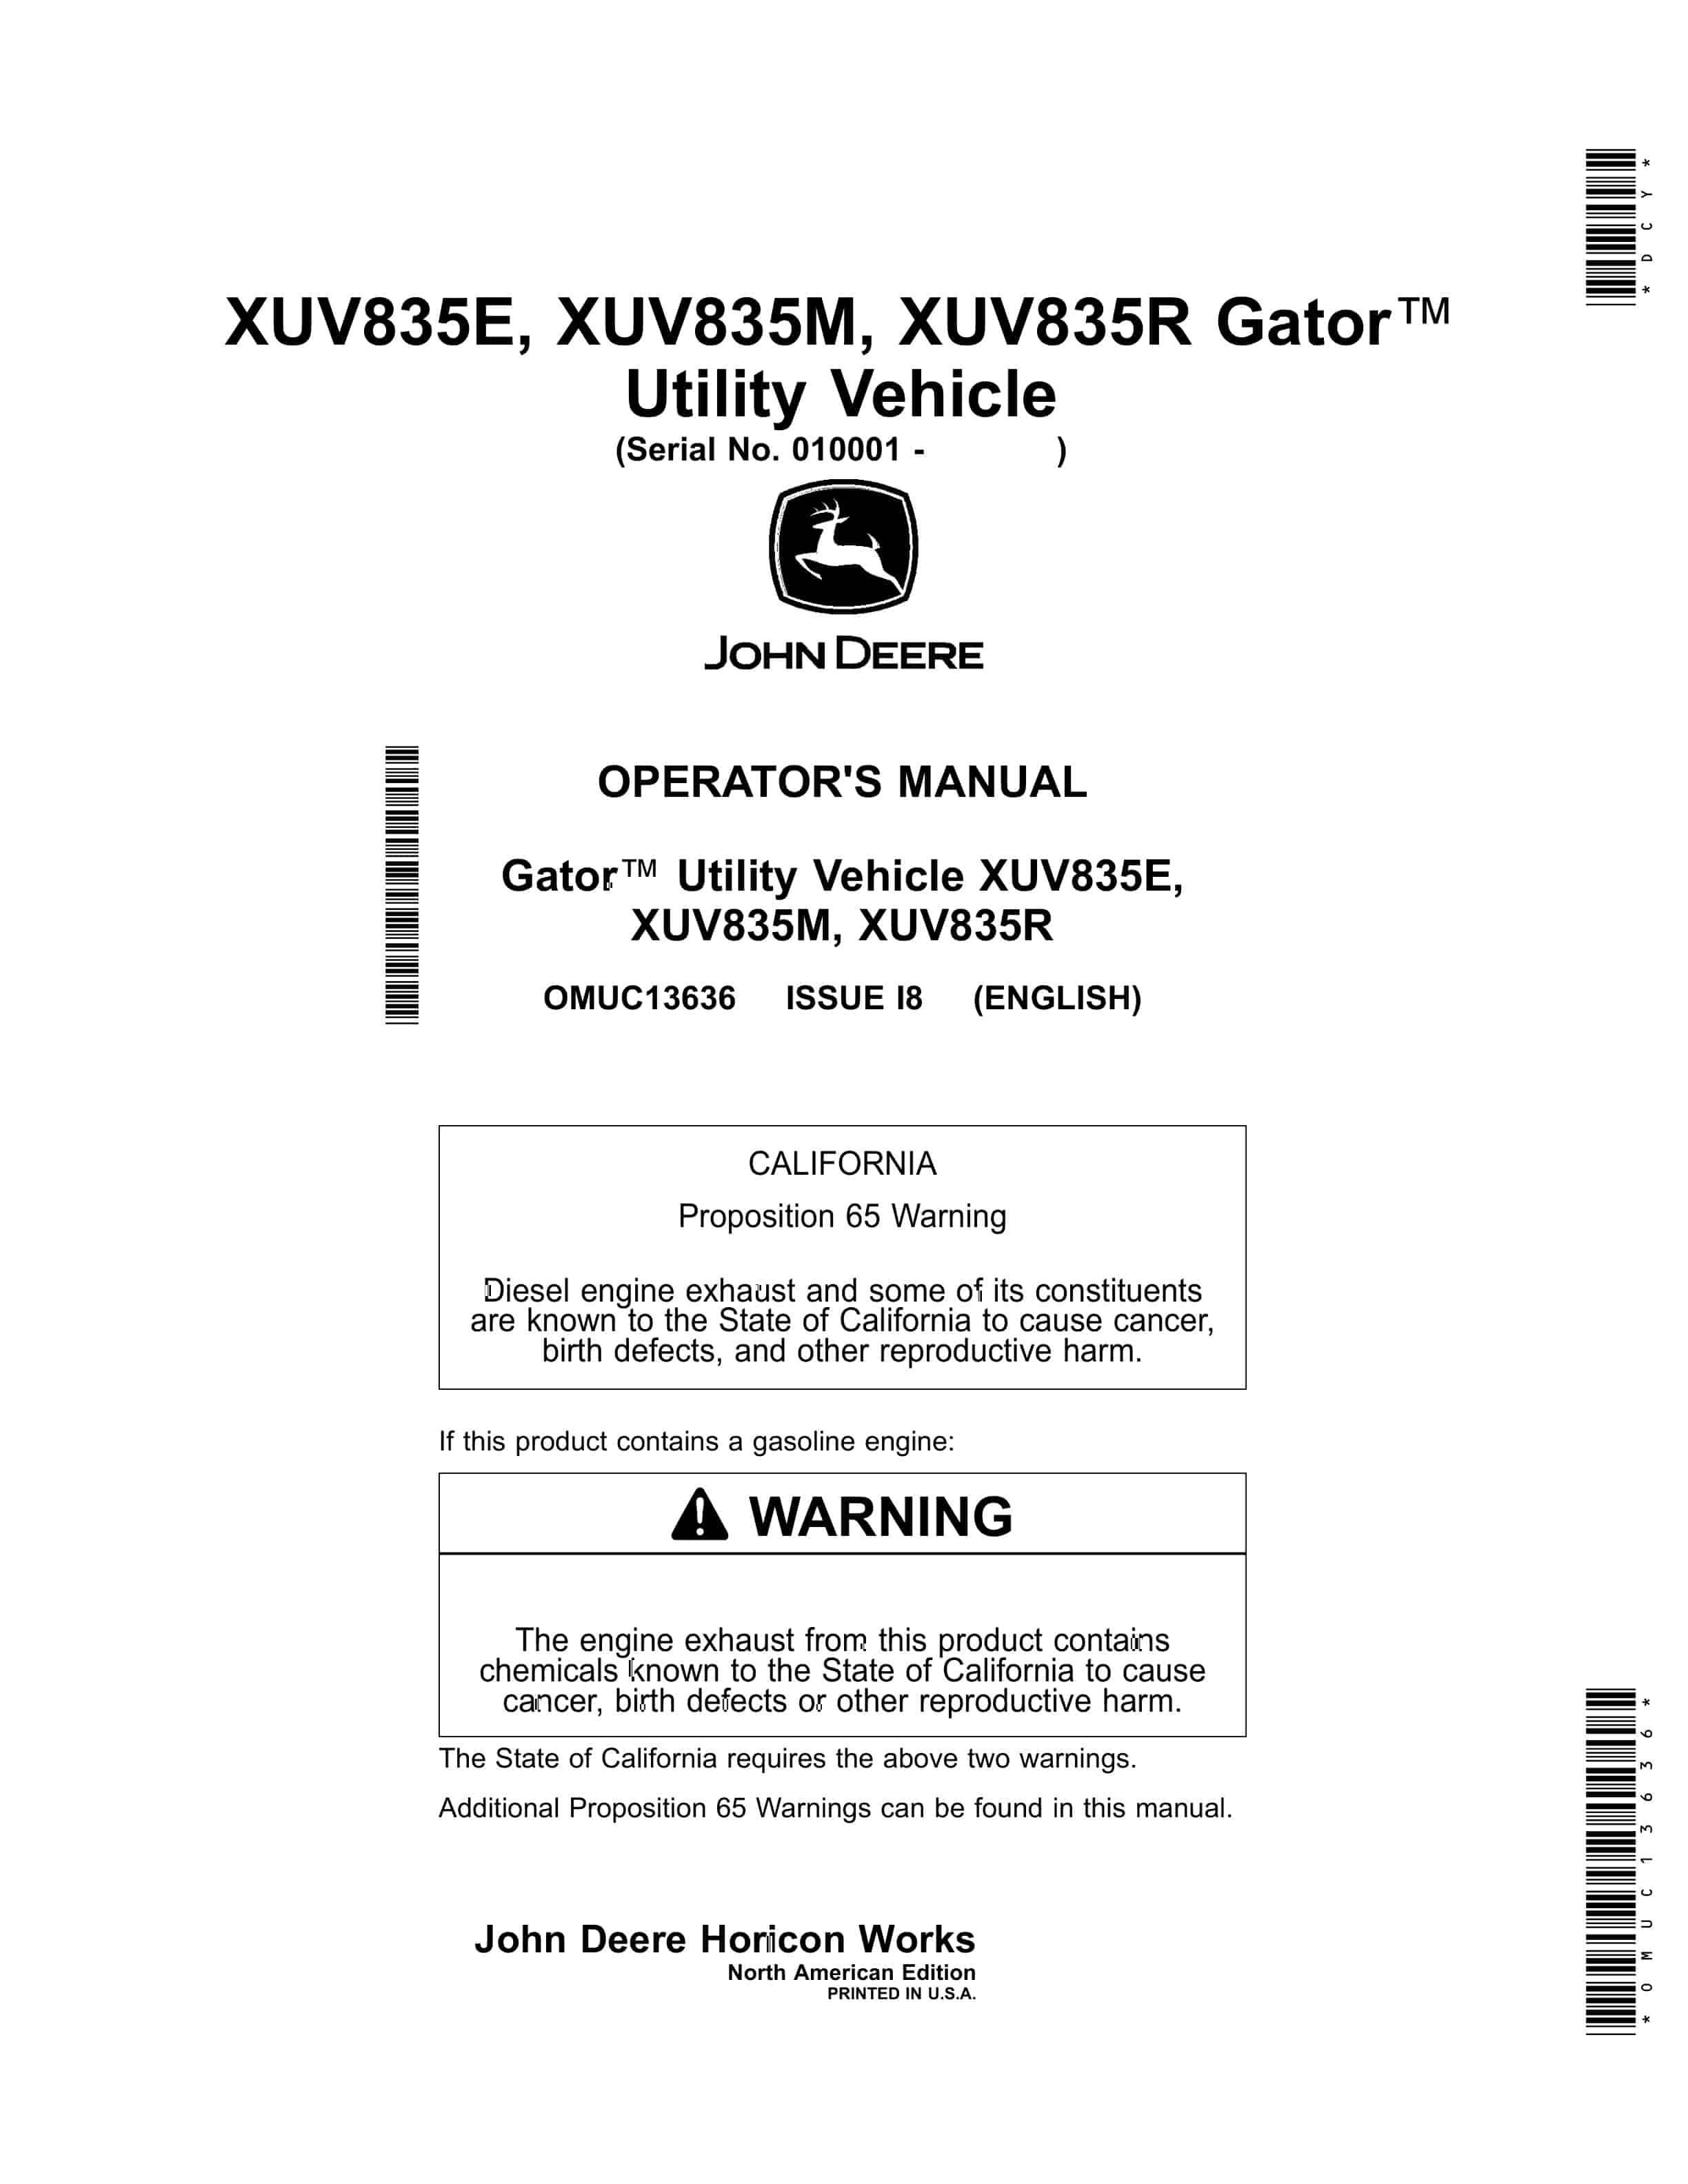 John Deere XUV835E XUV835M XUV835R Gator Utility Vehicles Operator Manual OMUC13636 1